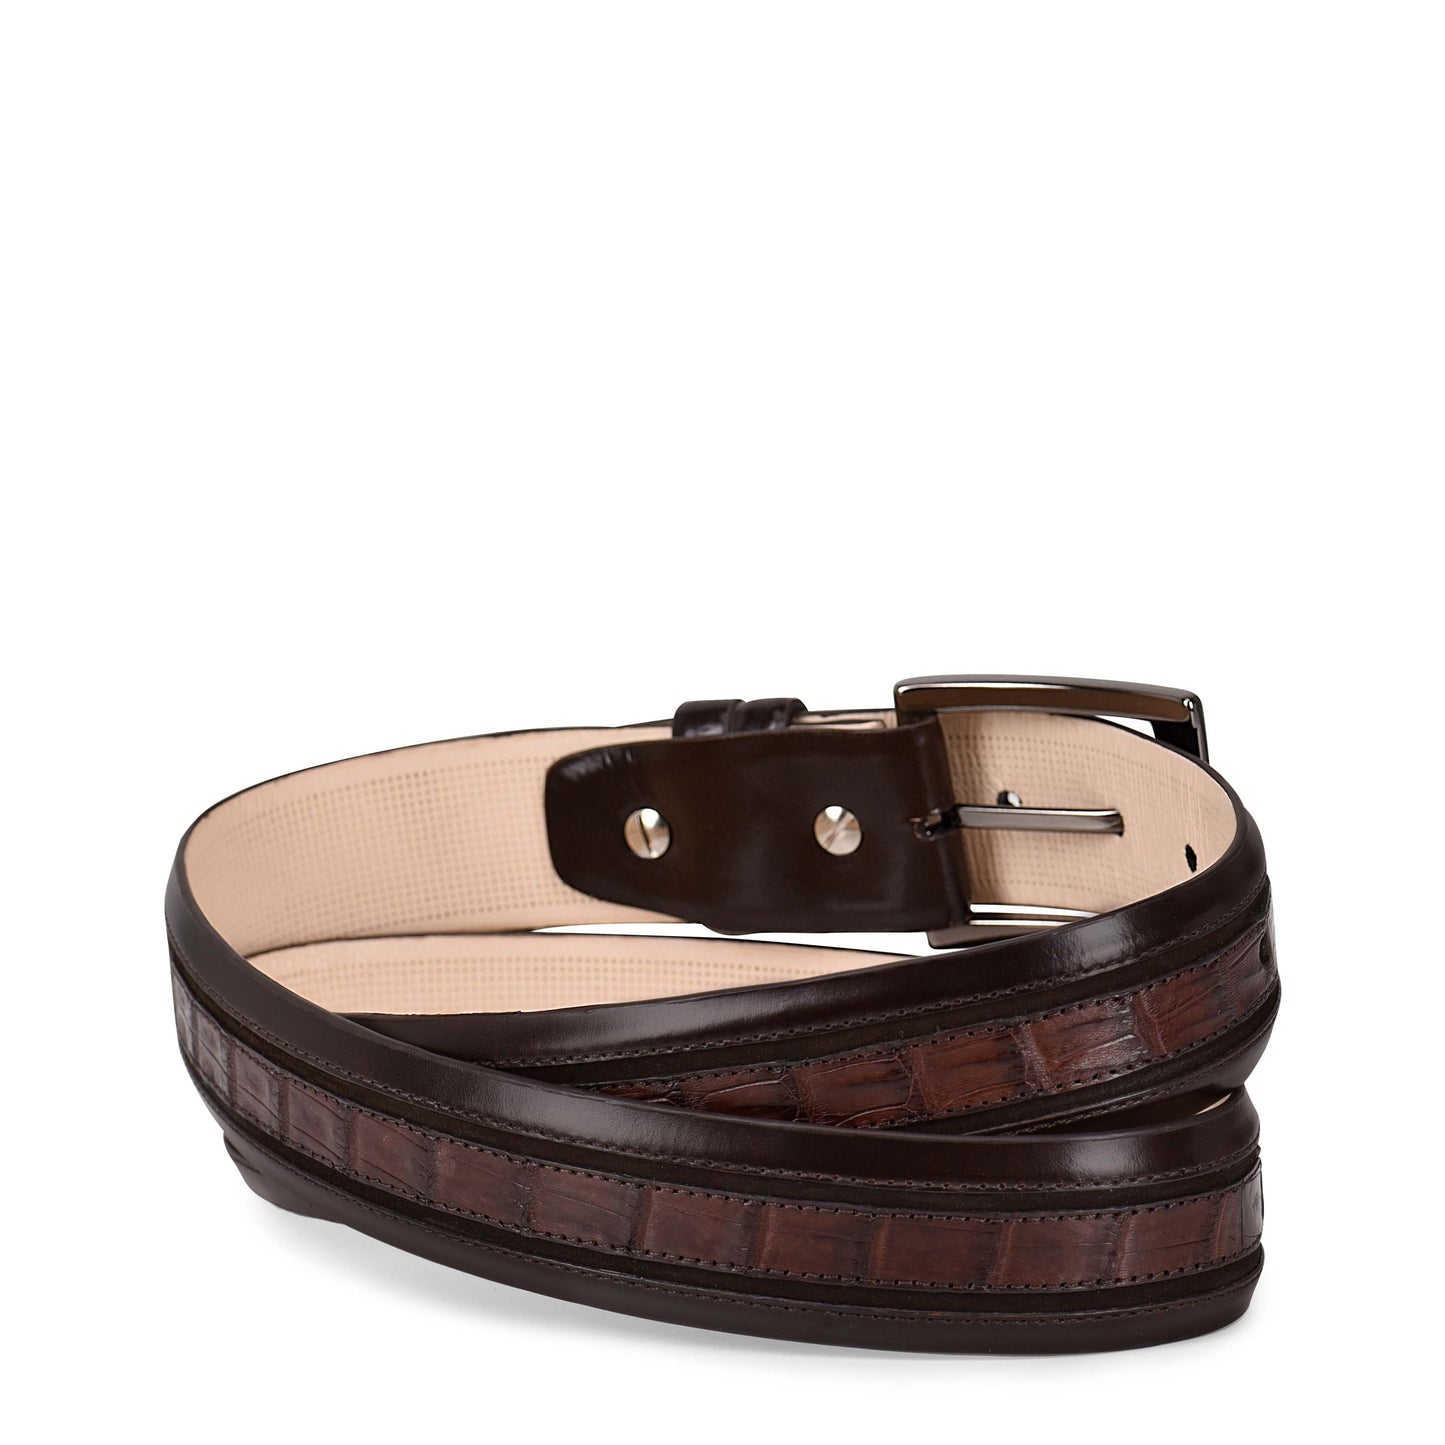 Formal dark brown exotic leather belt